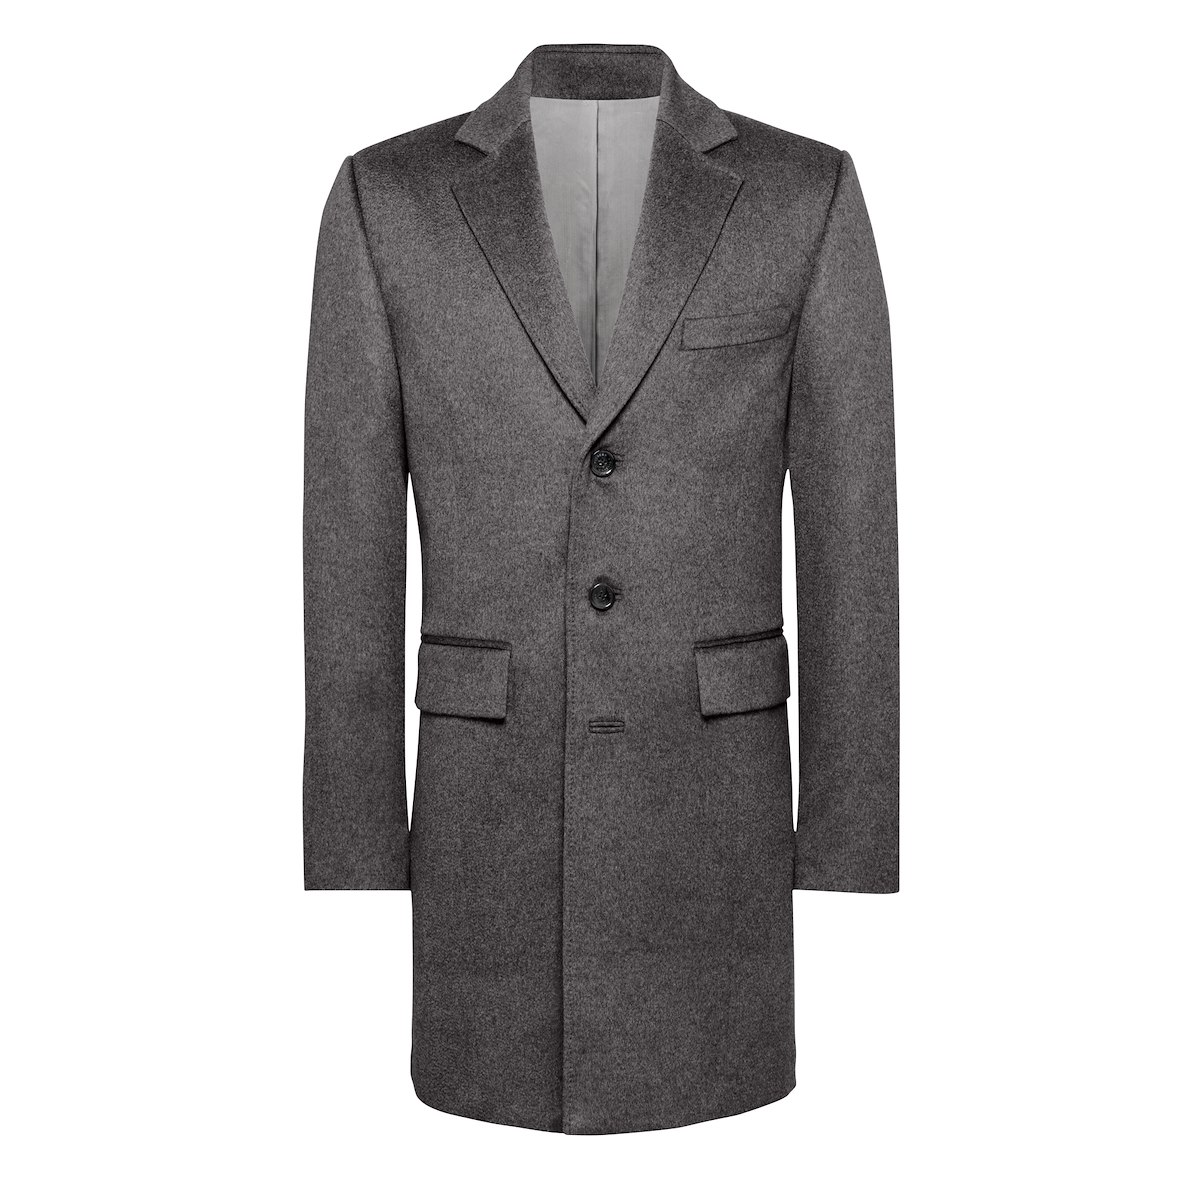 Top Coat-Charcoal Mélange Wool | J.Hilburn